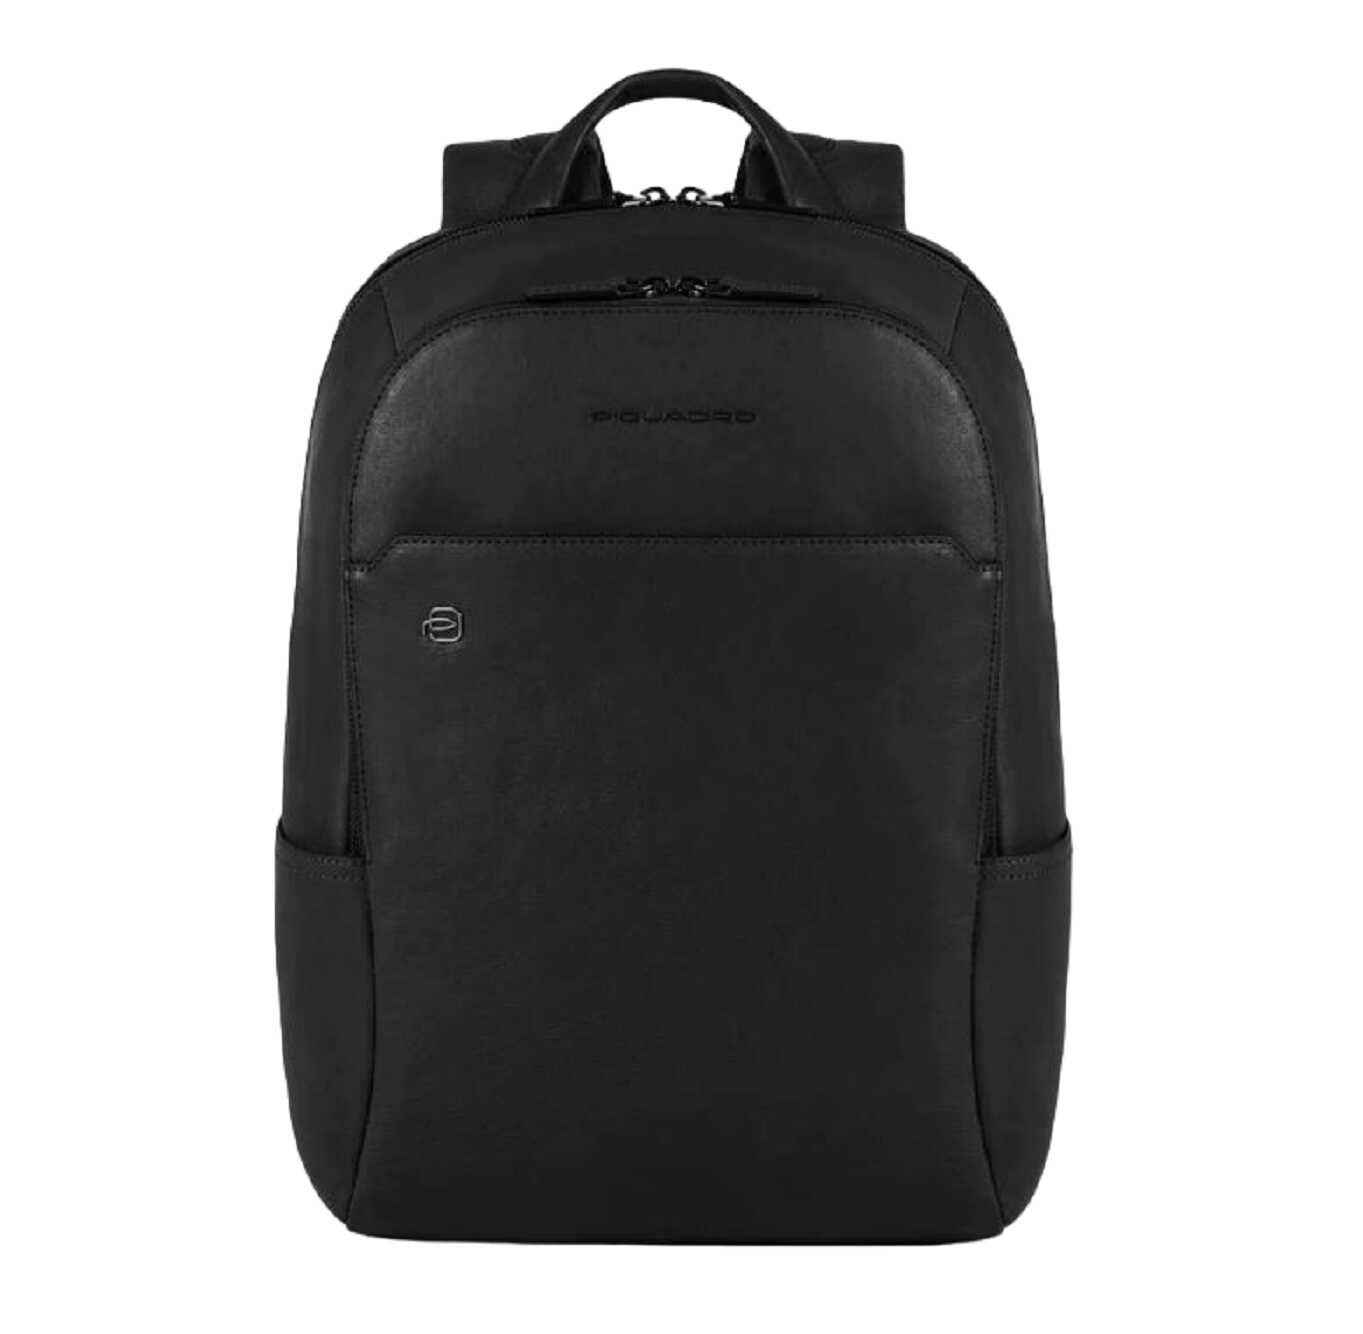 Piquadro Backpack By Piquadro Black